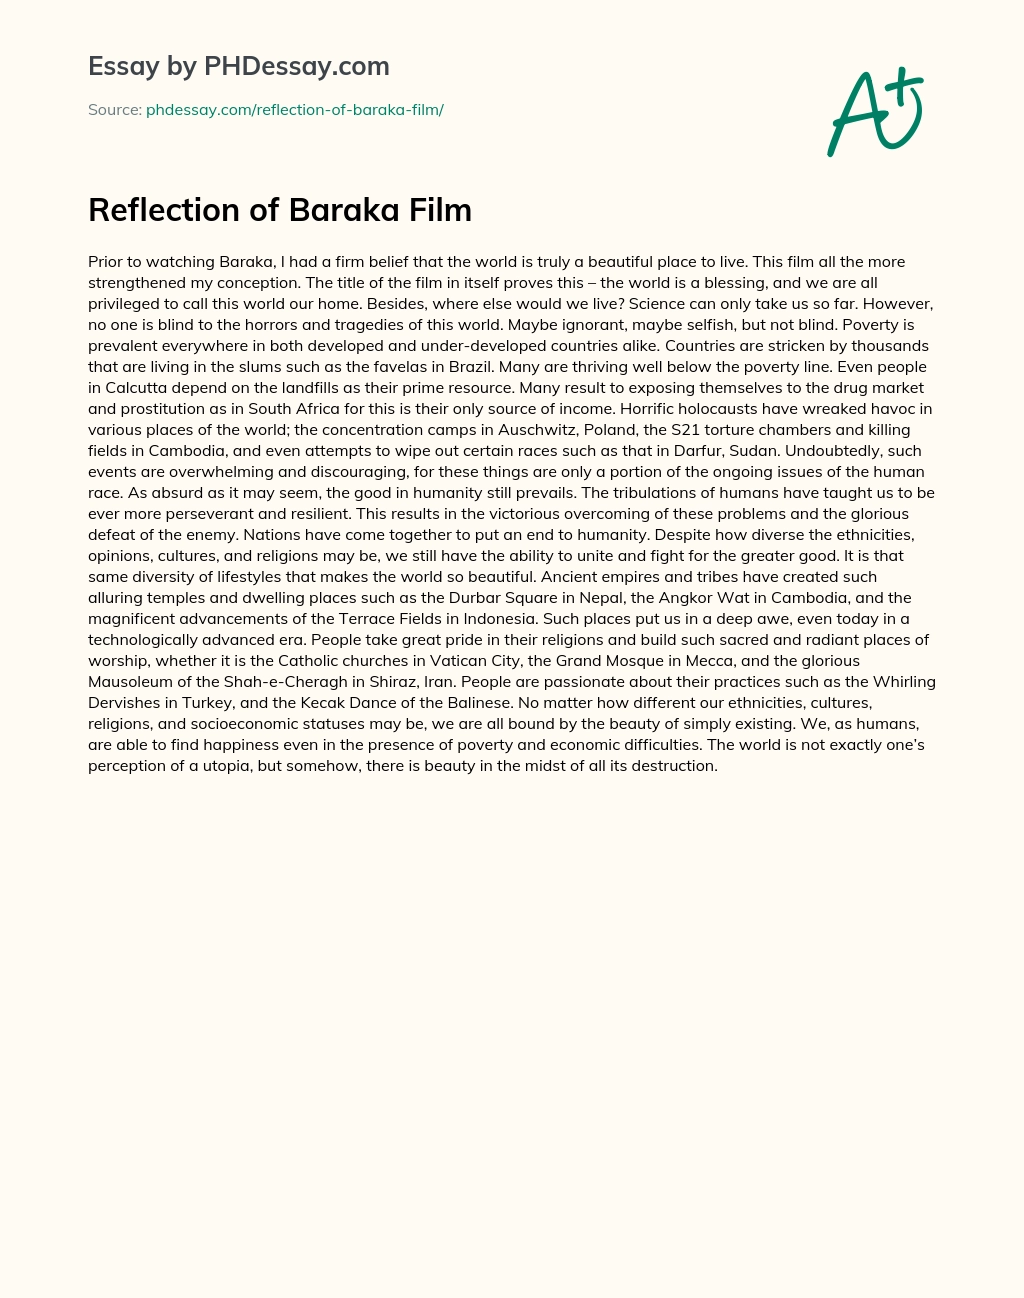 Reflection of Baraka Film essay